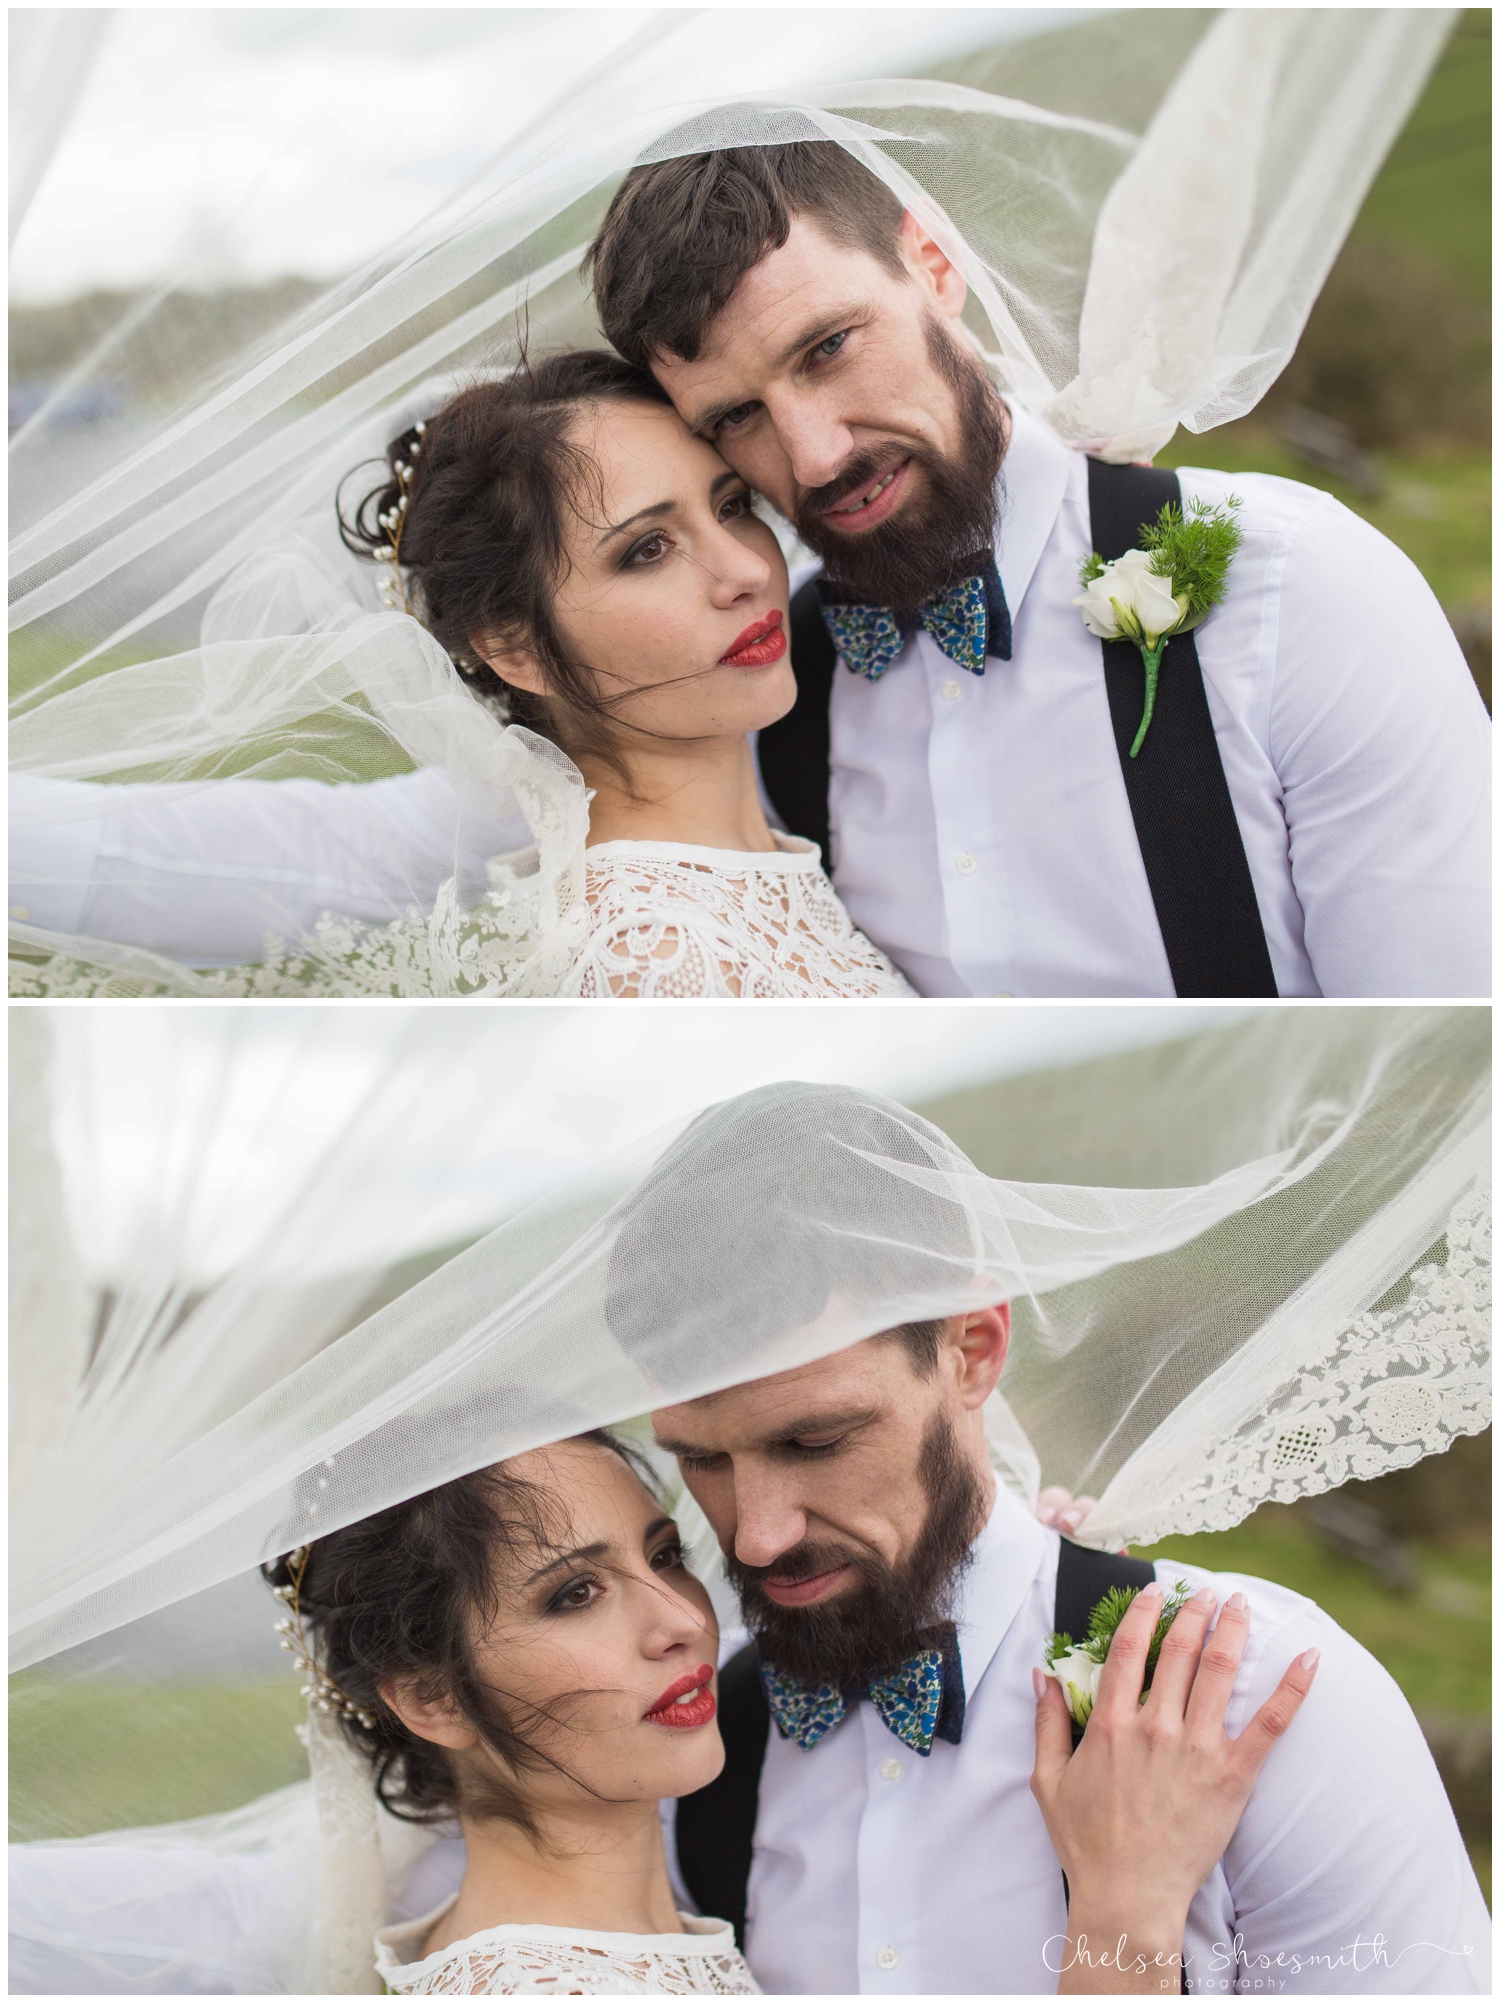 (173 of 183) Deya & Craig Bridal Styled Shoot Teggsnose country park macclesfield cheshire wedding photographer chelsea shoesmith photography_